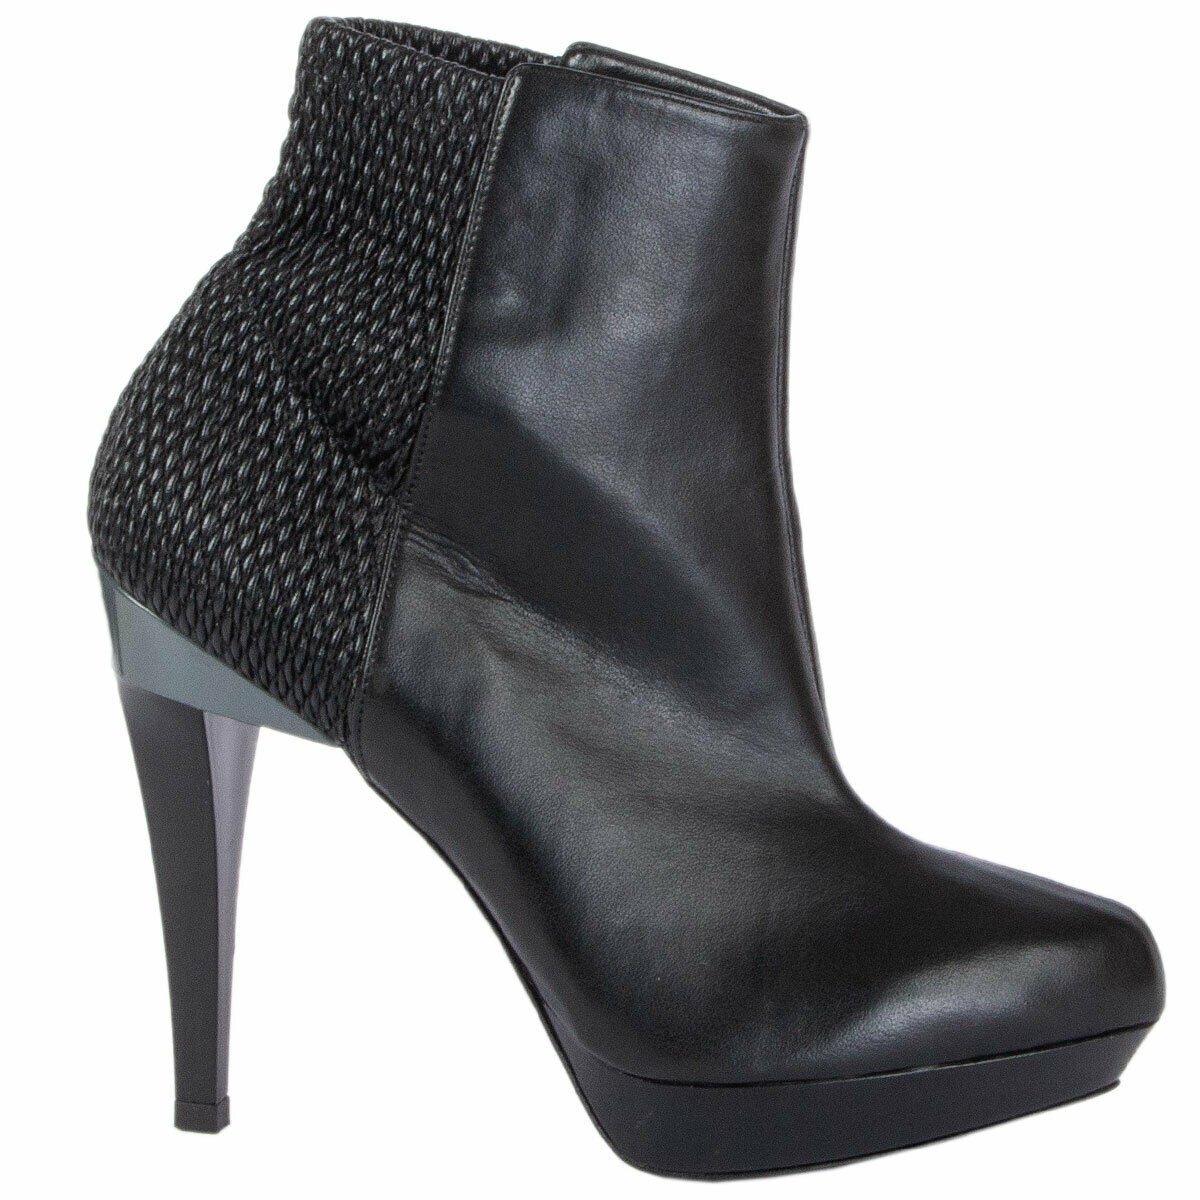 Stella McCartney Faux Leather Platform Ankle Boots in Black.jpg